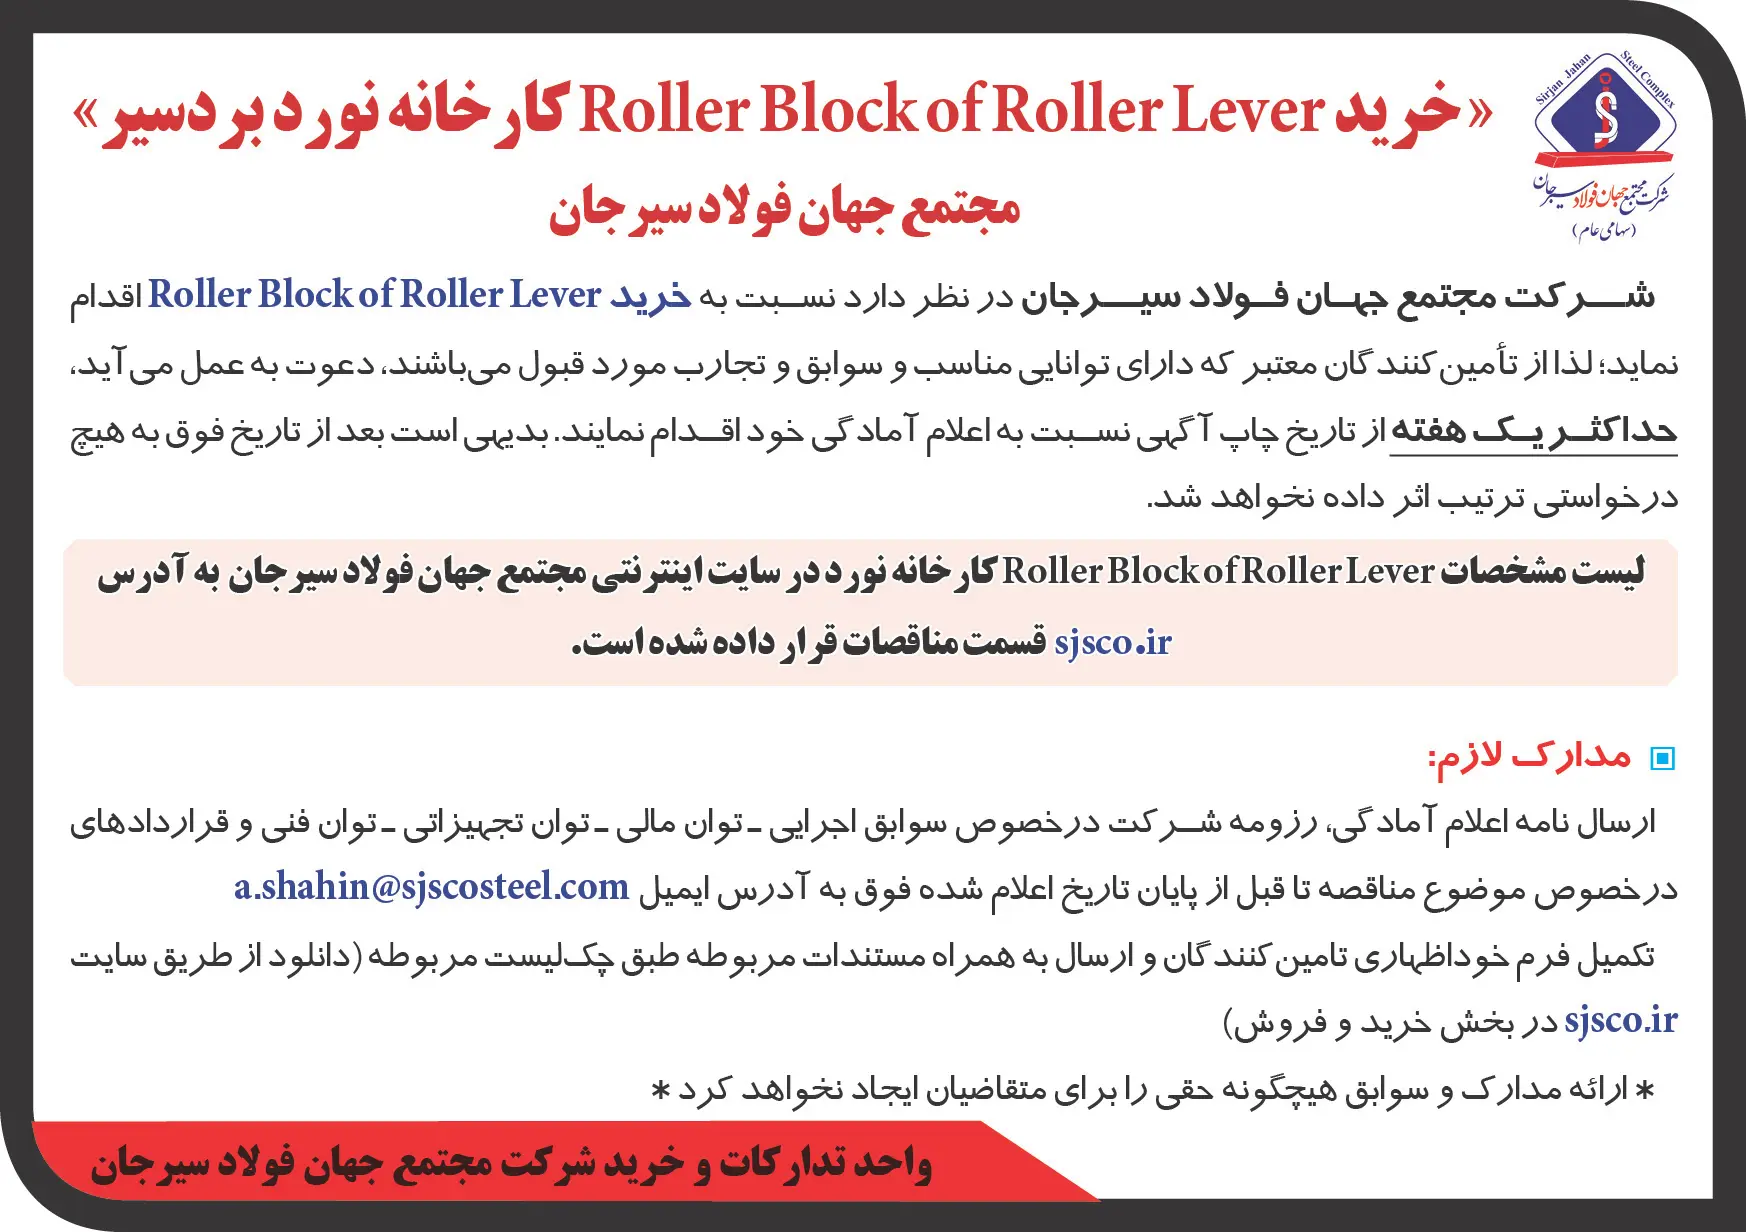 Roller block of roller leverسیرجان خرید